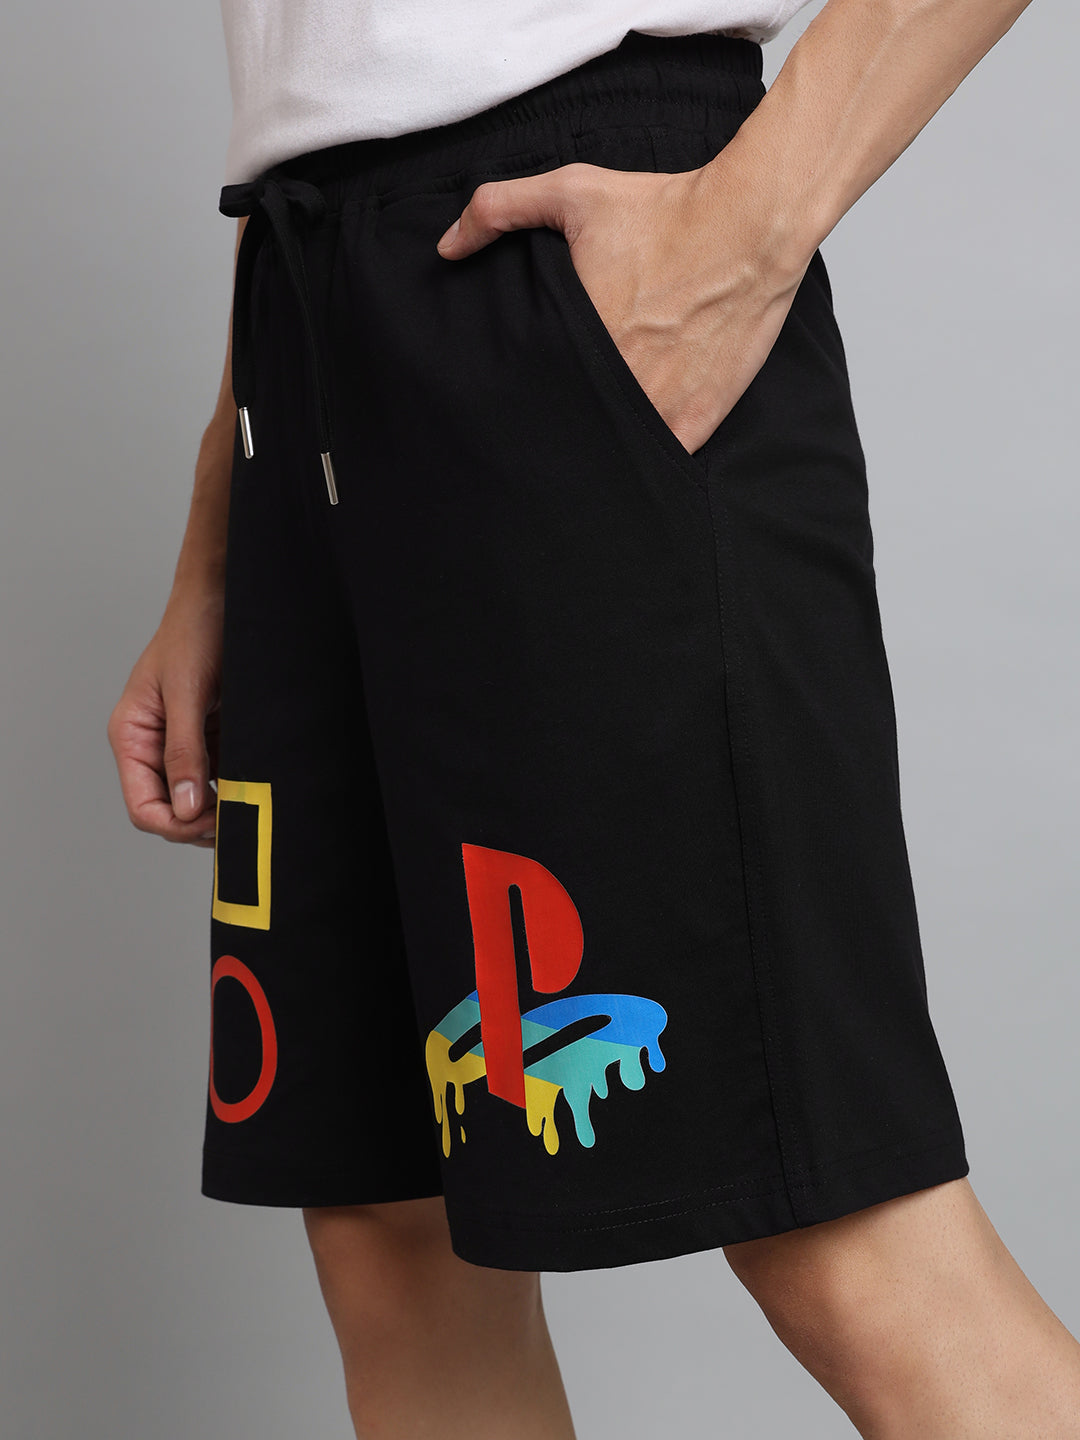 Playstation Regular Fit Shorts (Black) - Wearduds